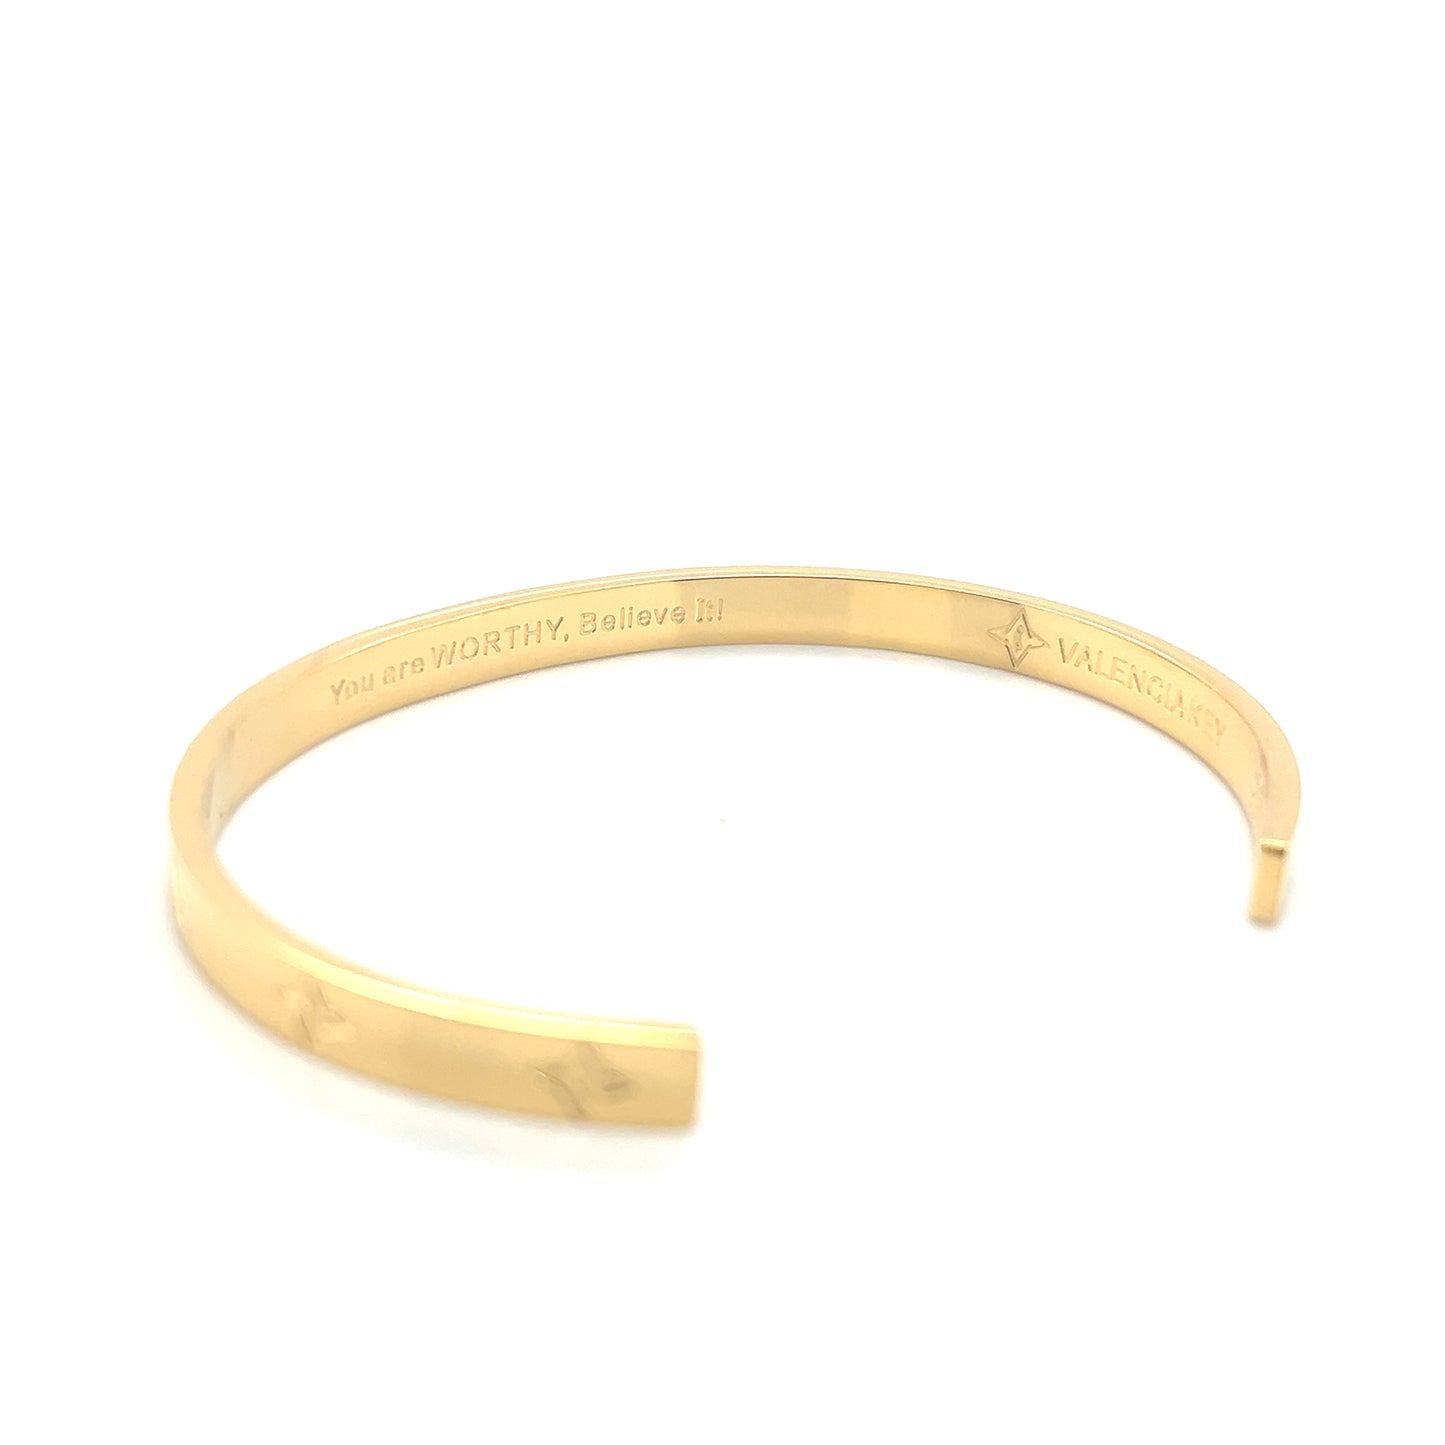 VALENCIA KEY WORTHY 18K Adjustable Gold Plated Bracelet